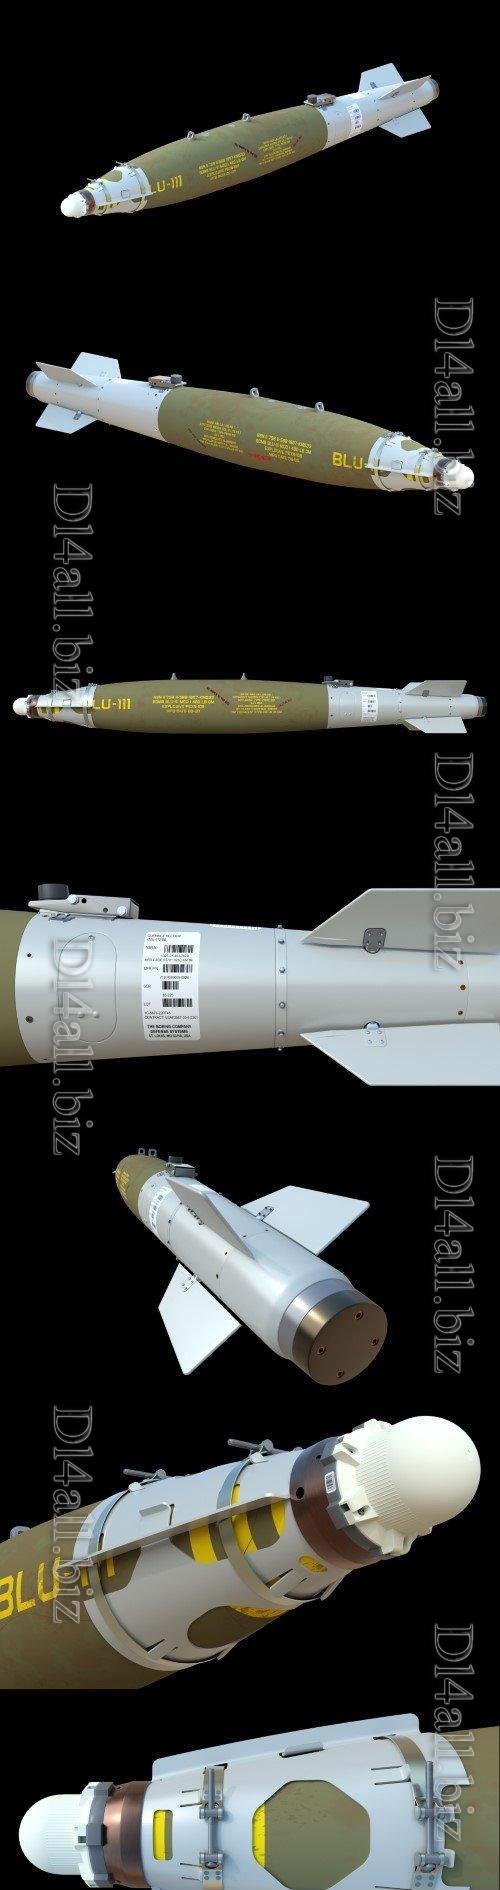 GBU 38 JDAM Bomb - 3d model